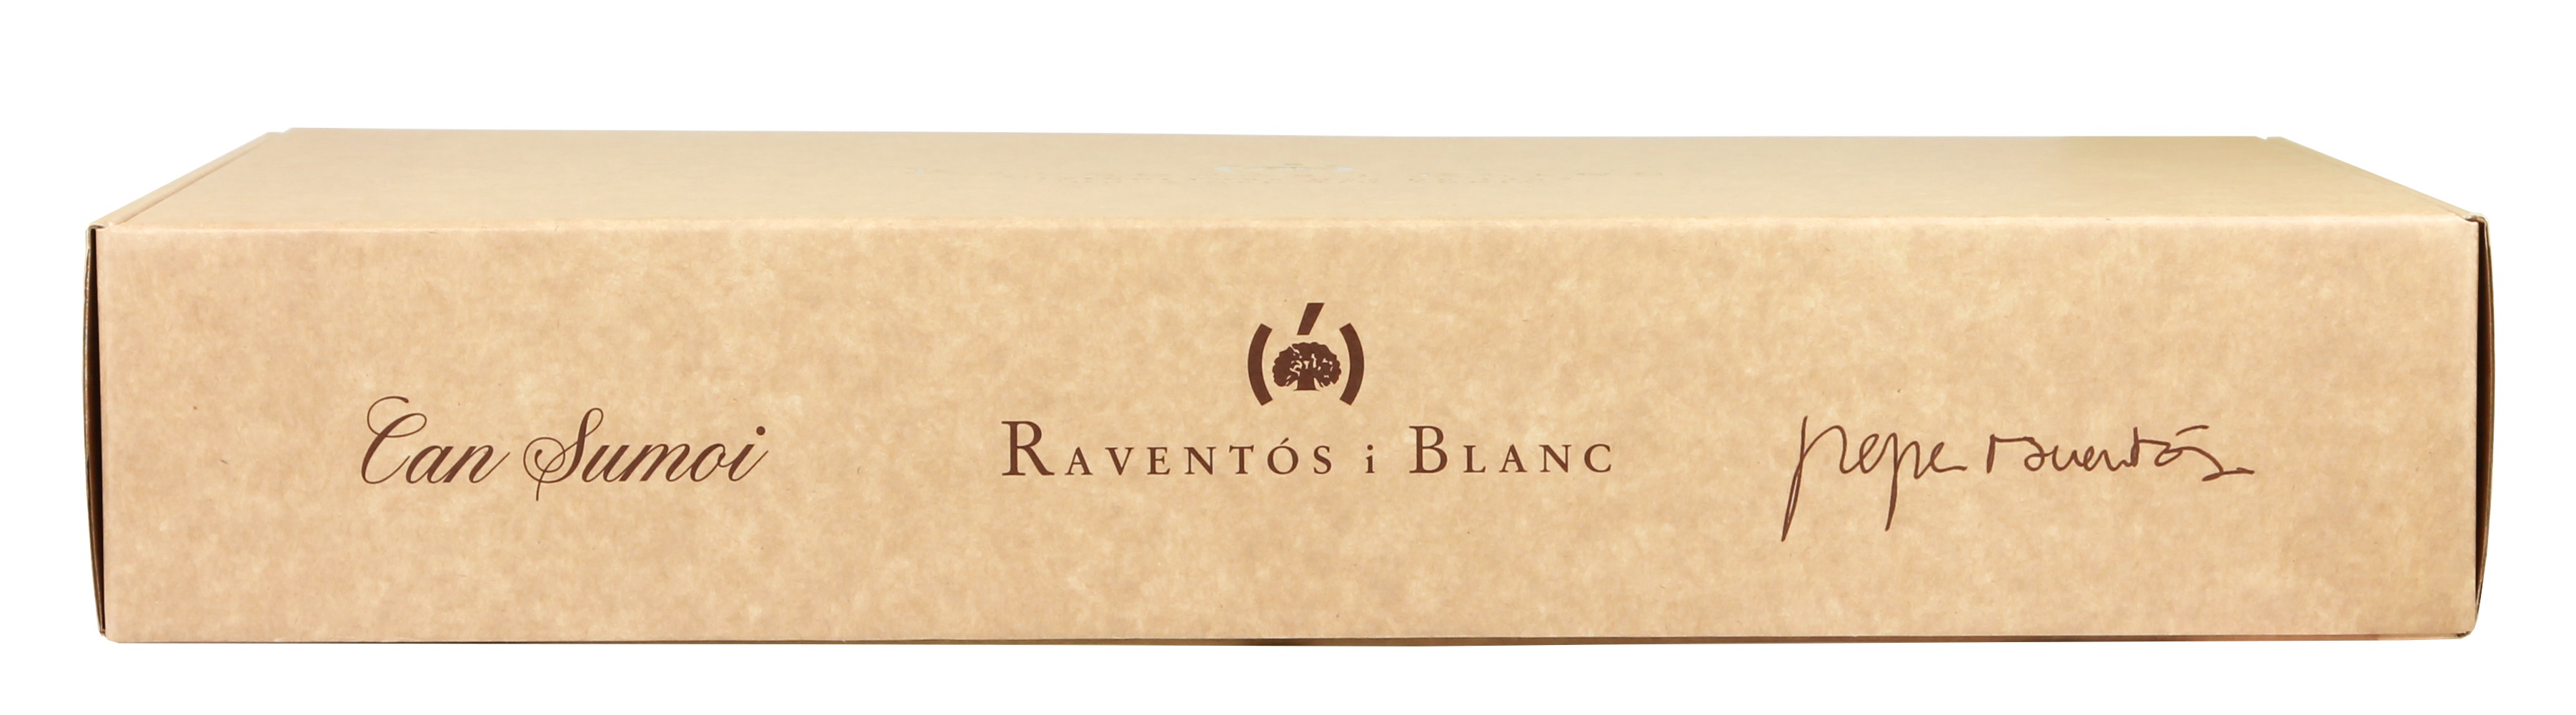 Raventos i Blanc Case - 6